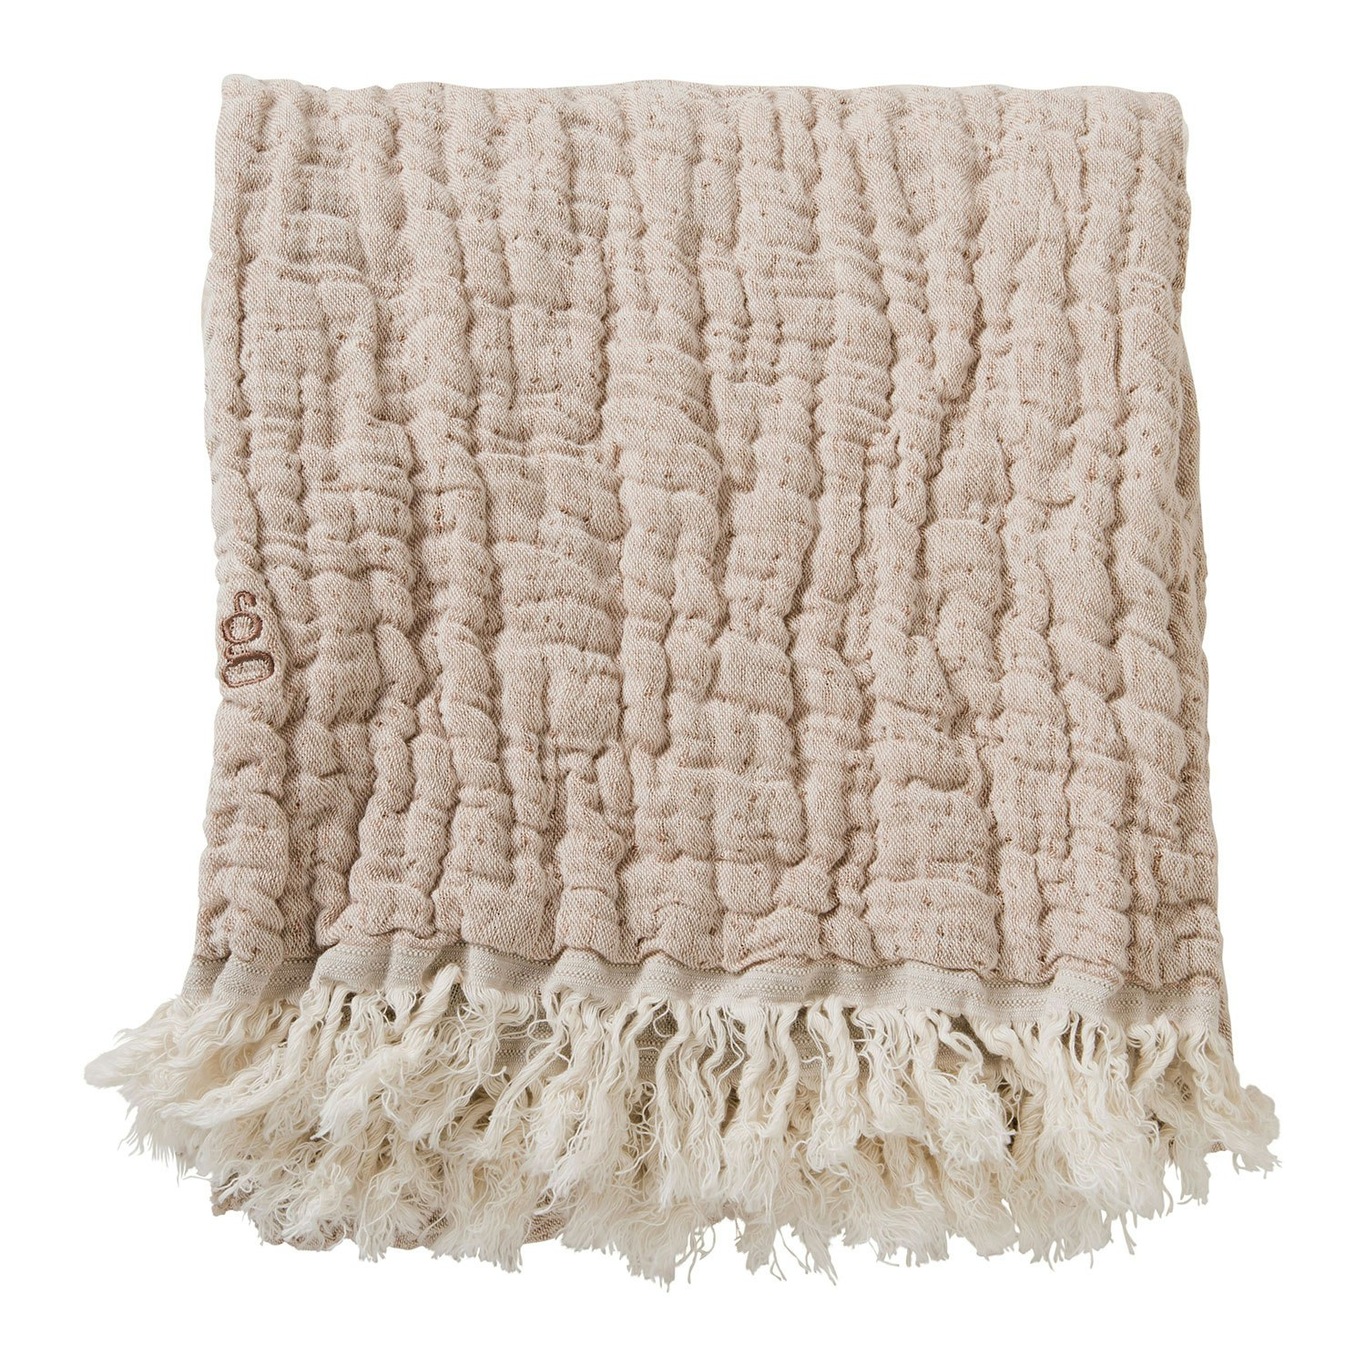 Mellow Tawny Blanket, 110x110 cm